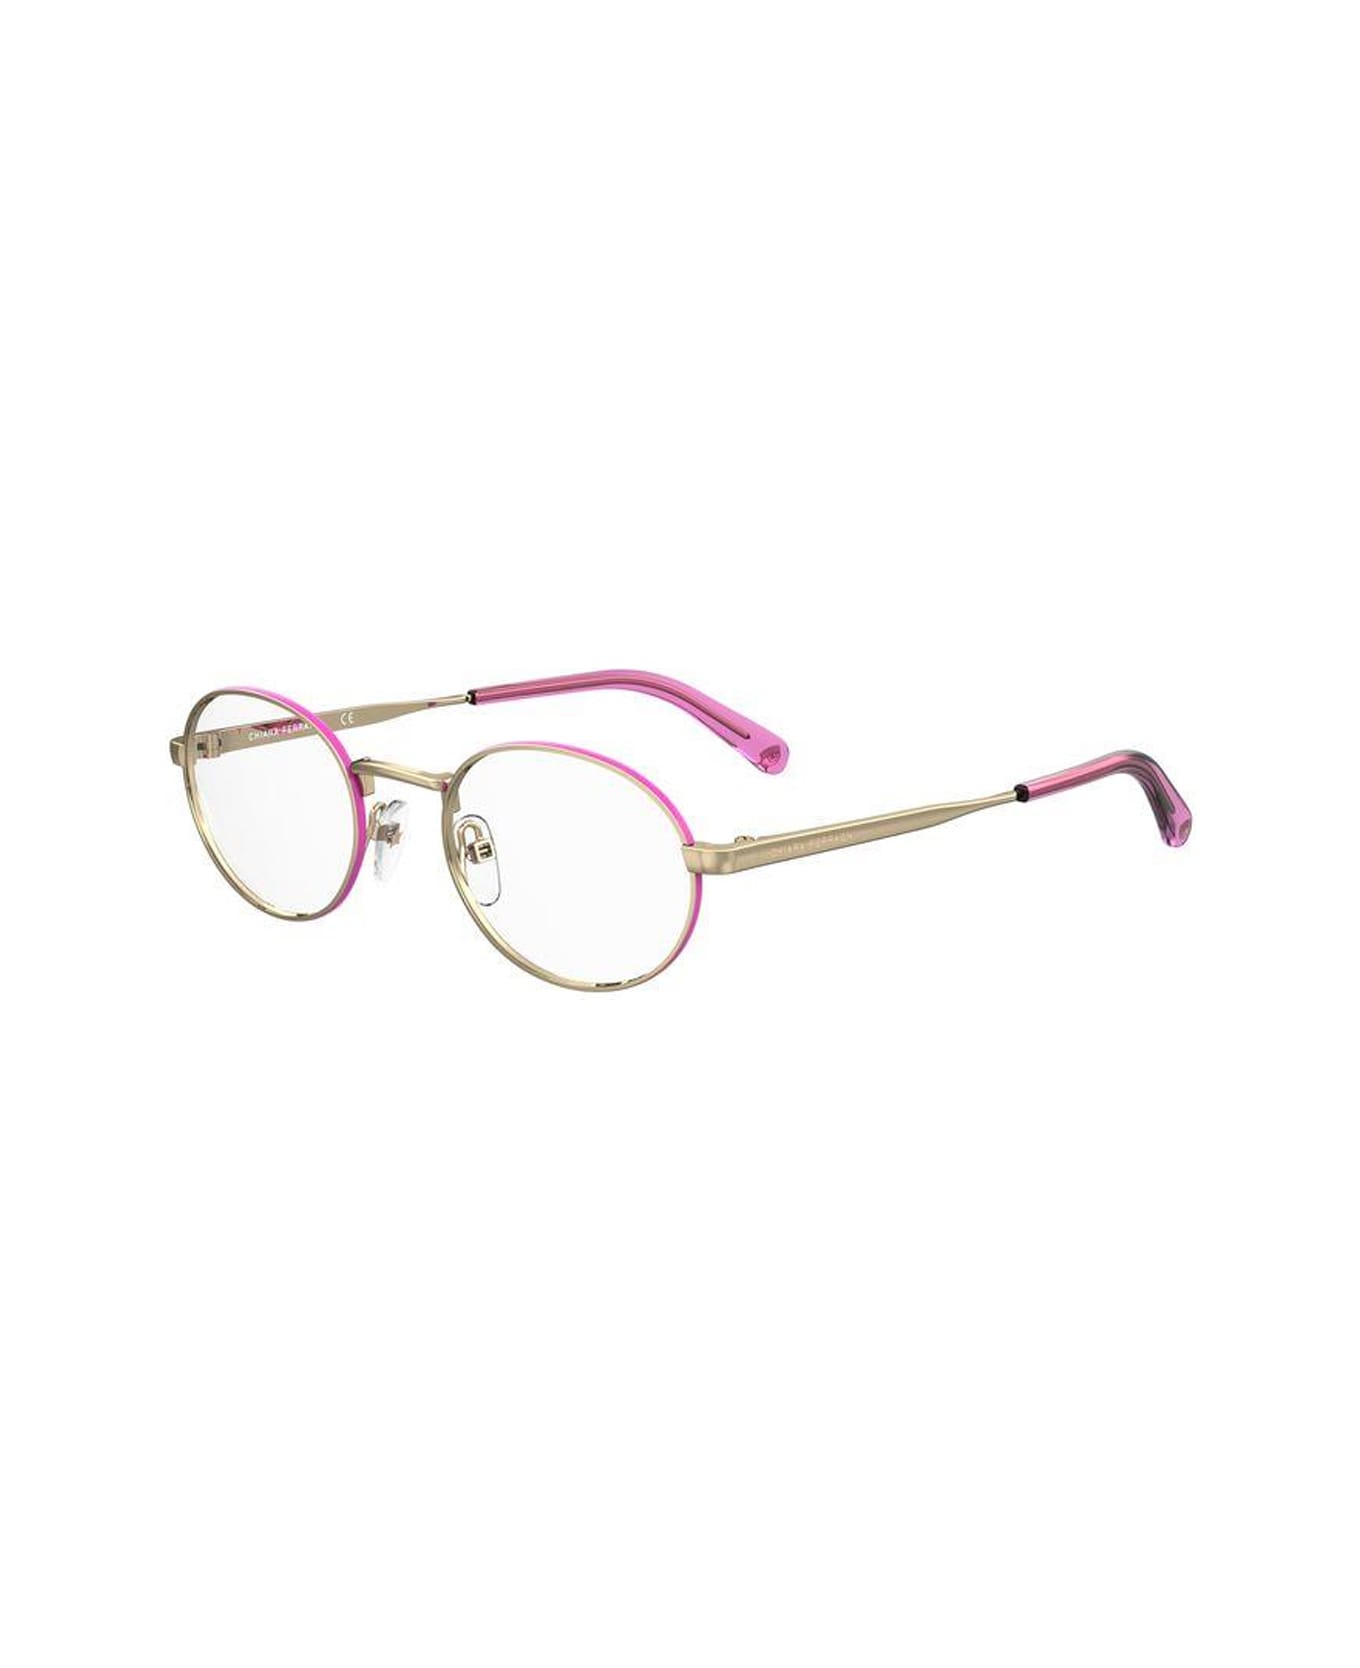 Chiara Ferragni Cf 1024 Eyr/20 Gold Pink Glasses - Oro アイウェア